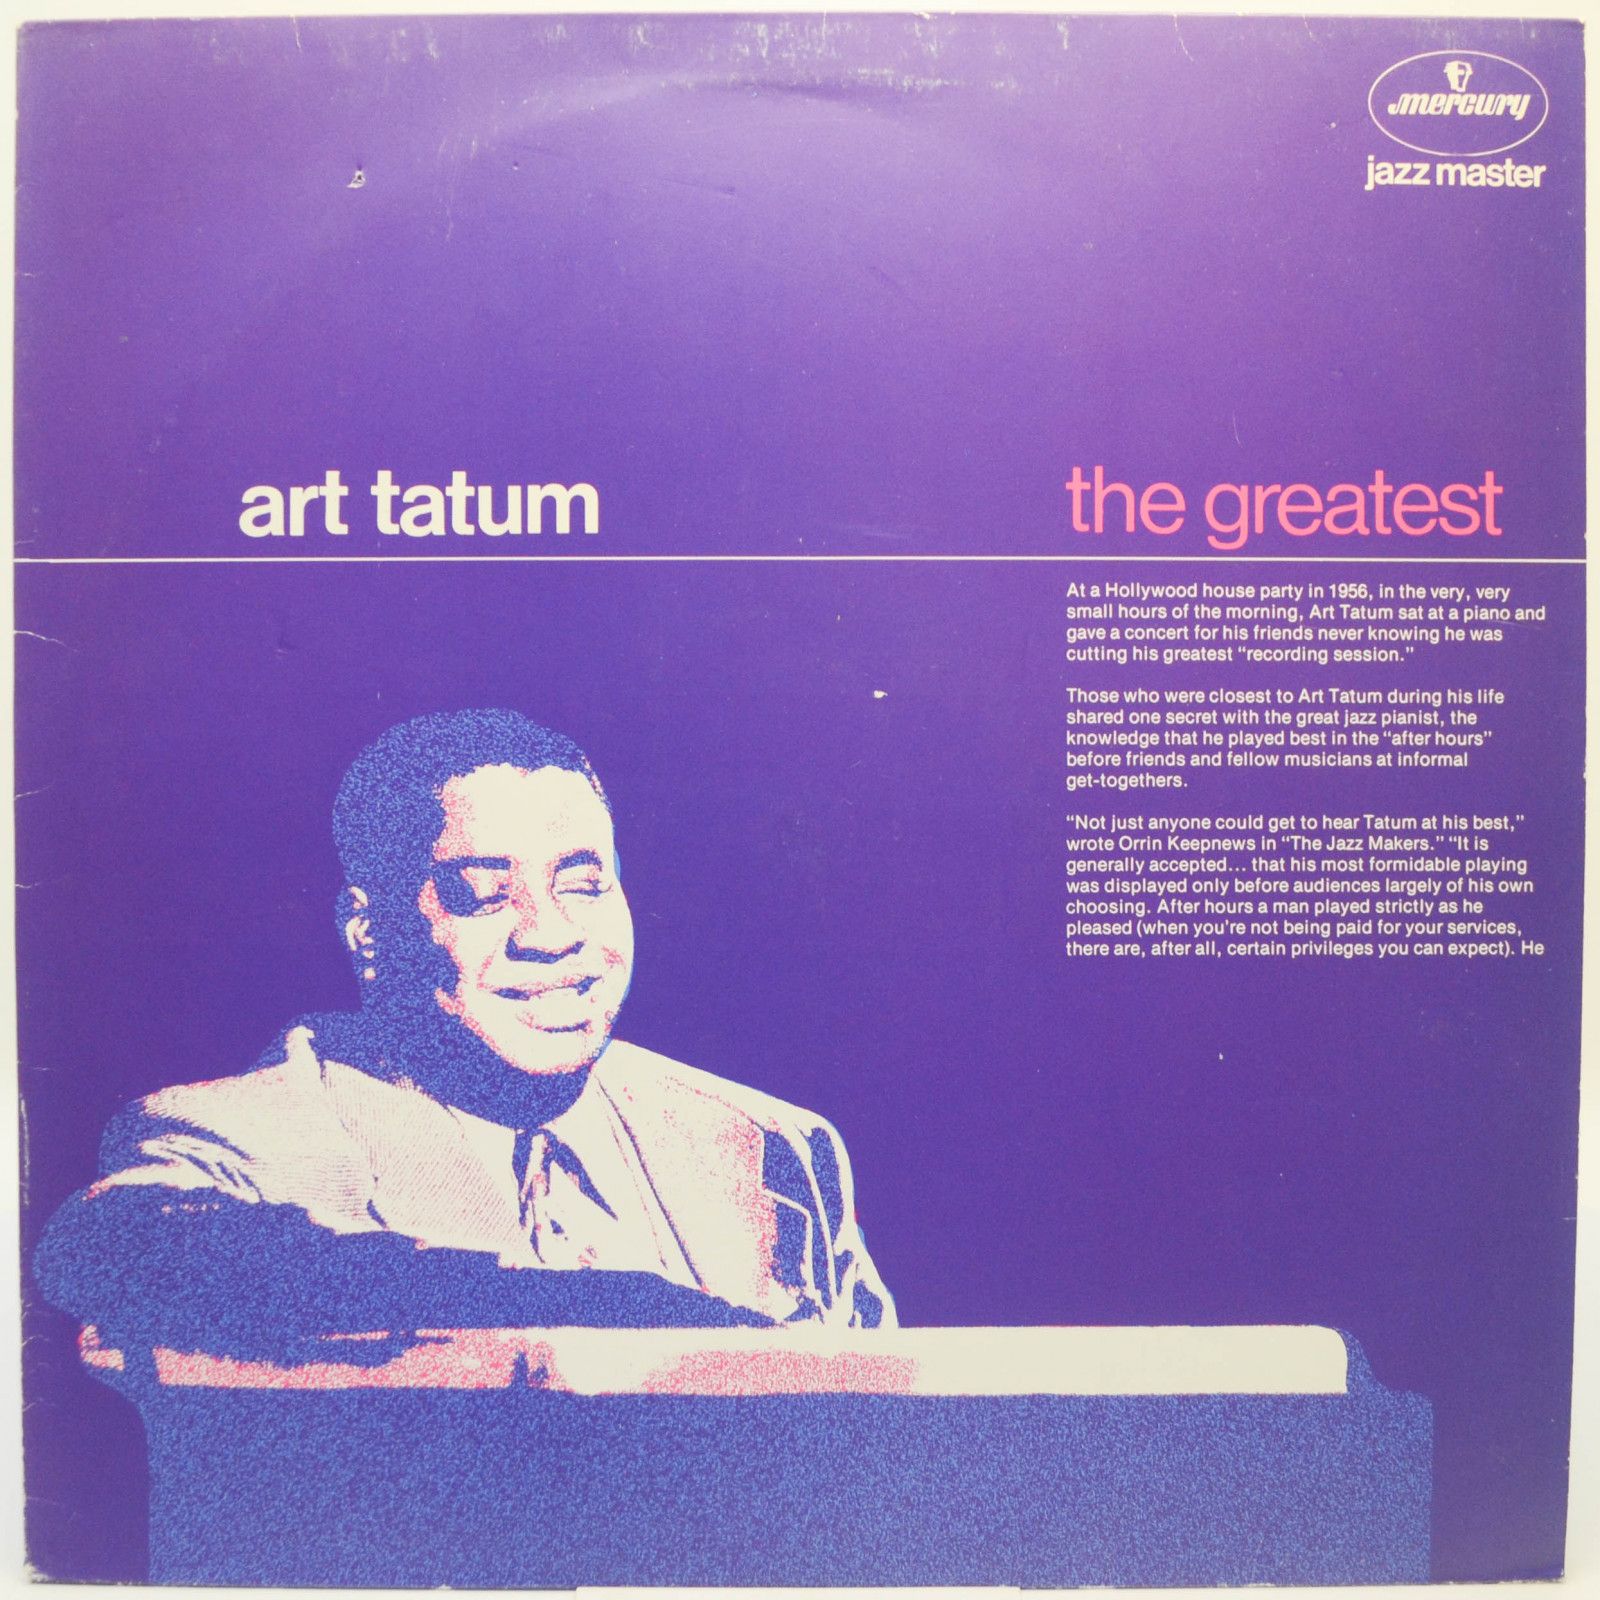 Art Tatum — The Greatest, 1973